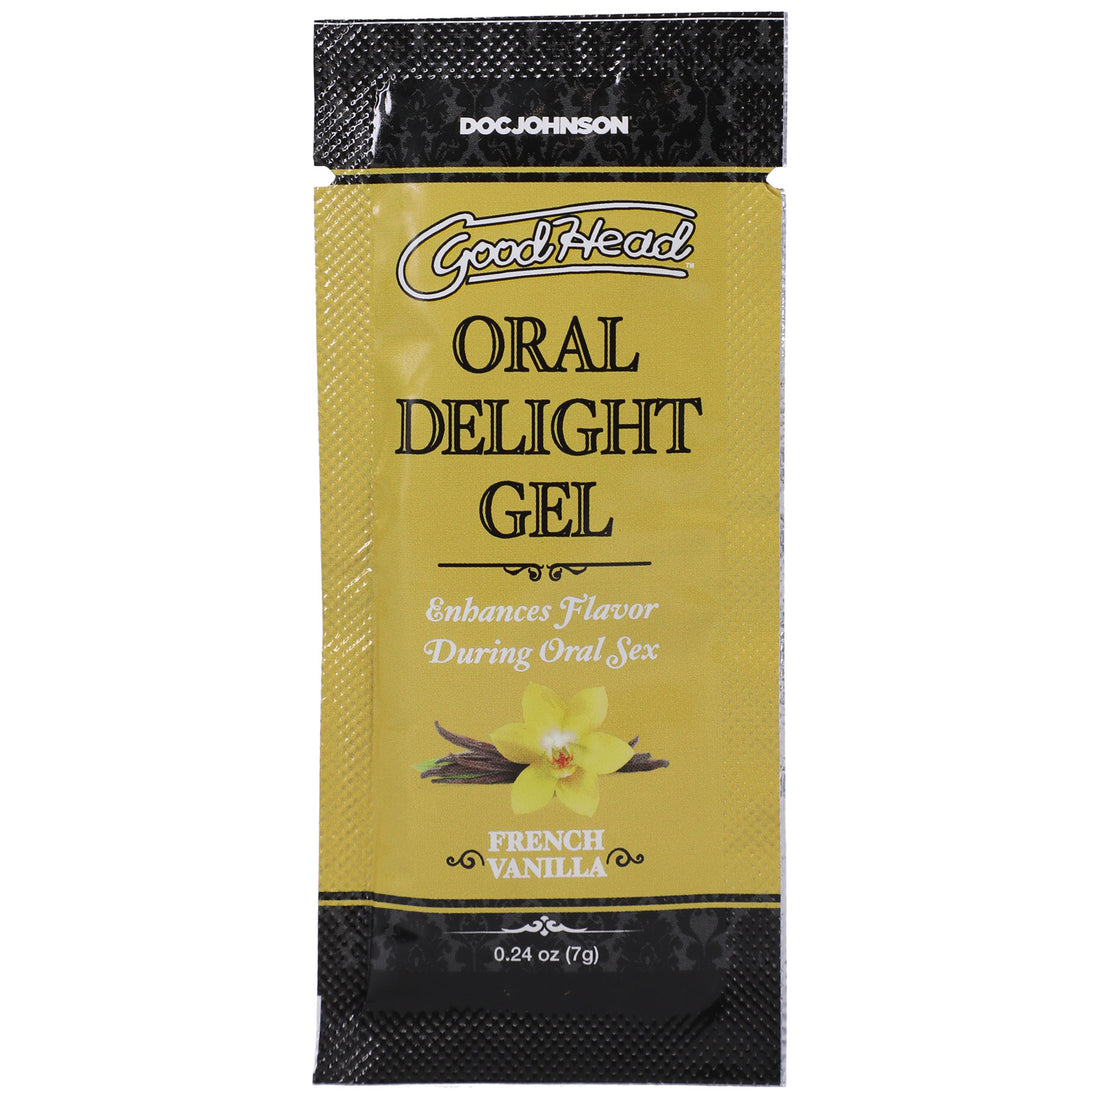 Goodhead - Oral Delight Gel - French Vanilla -  0.24 Oz DJ1387-30-BU